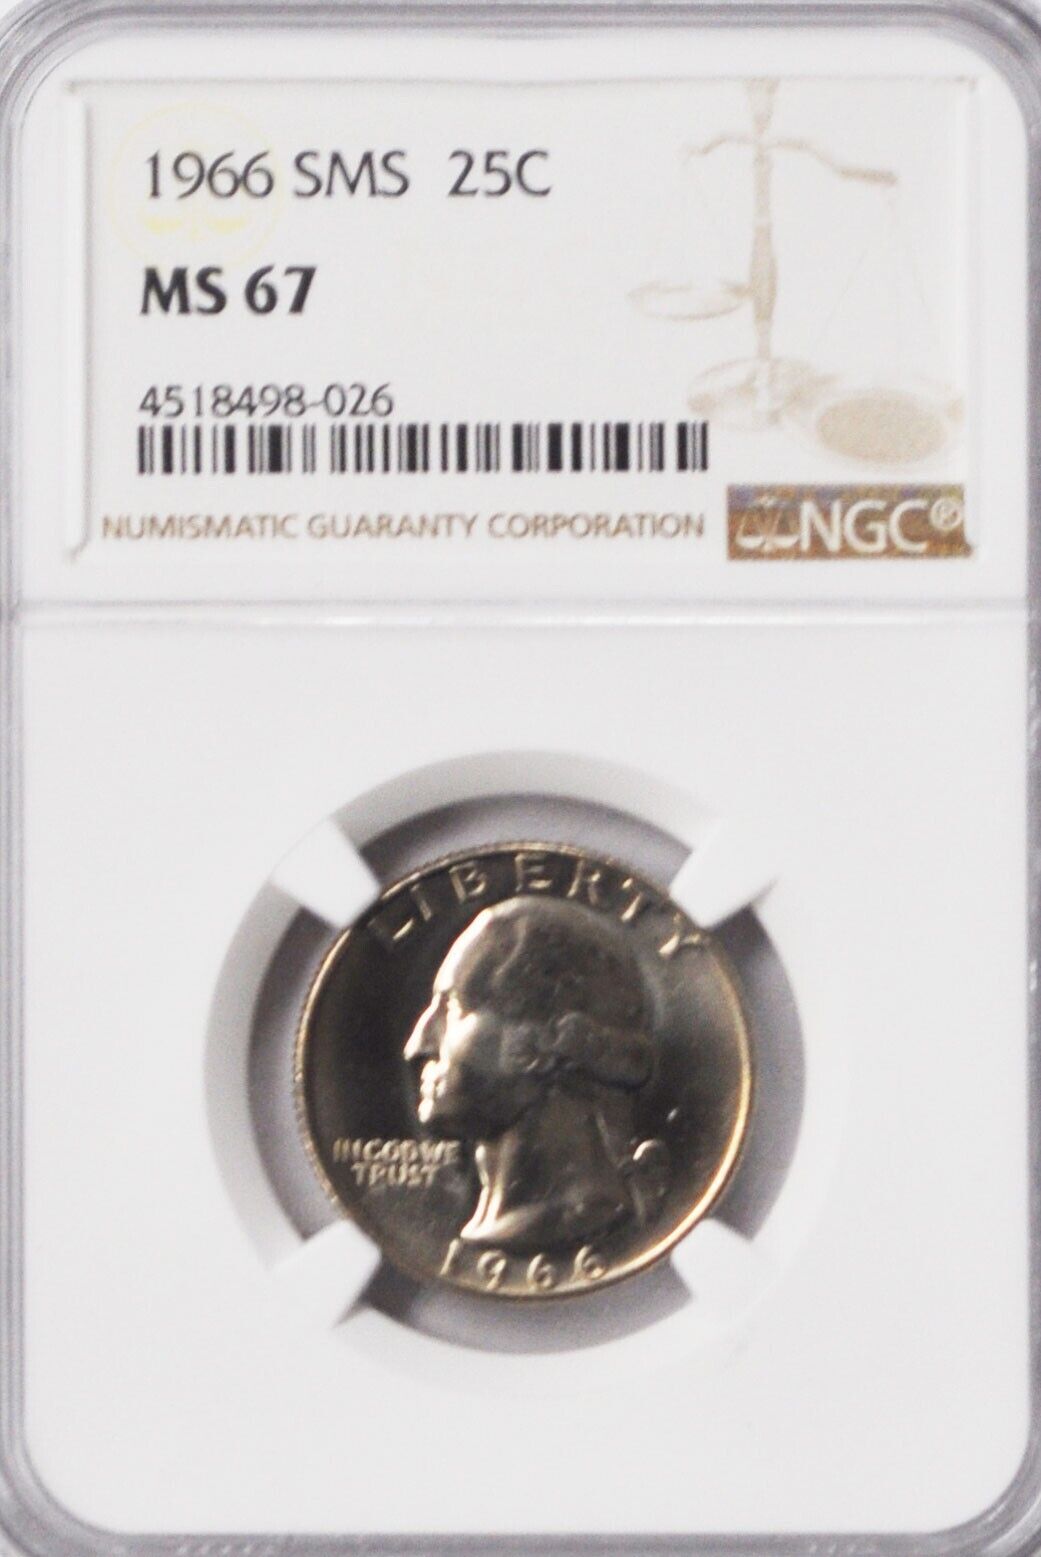 1966 SMS 25c Washington Special Mint Quarter Dollar NGC MS67 Gem Unc